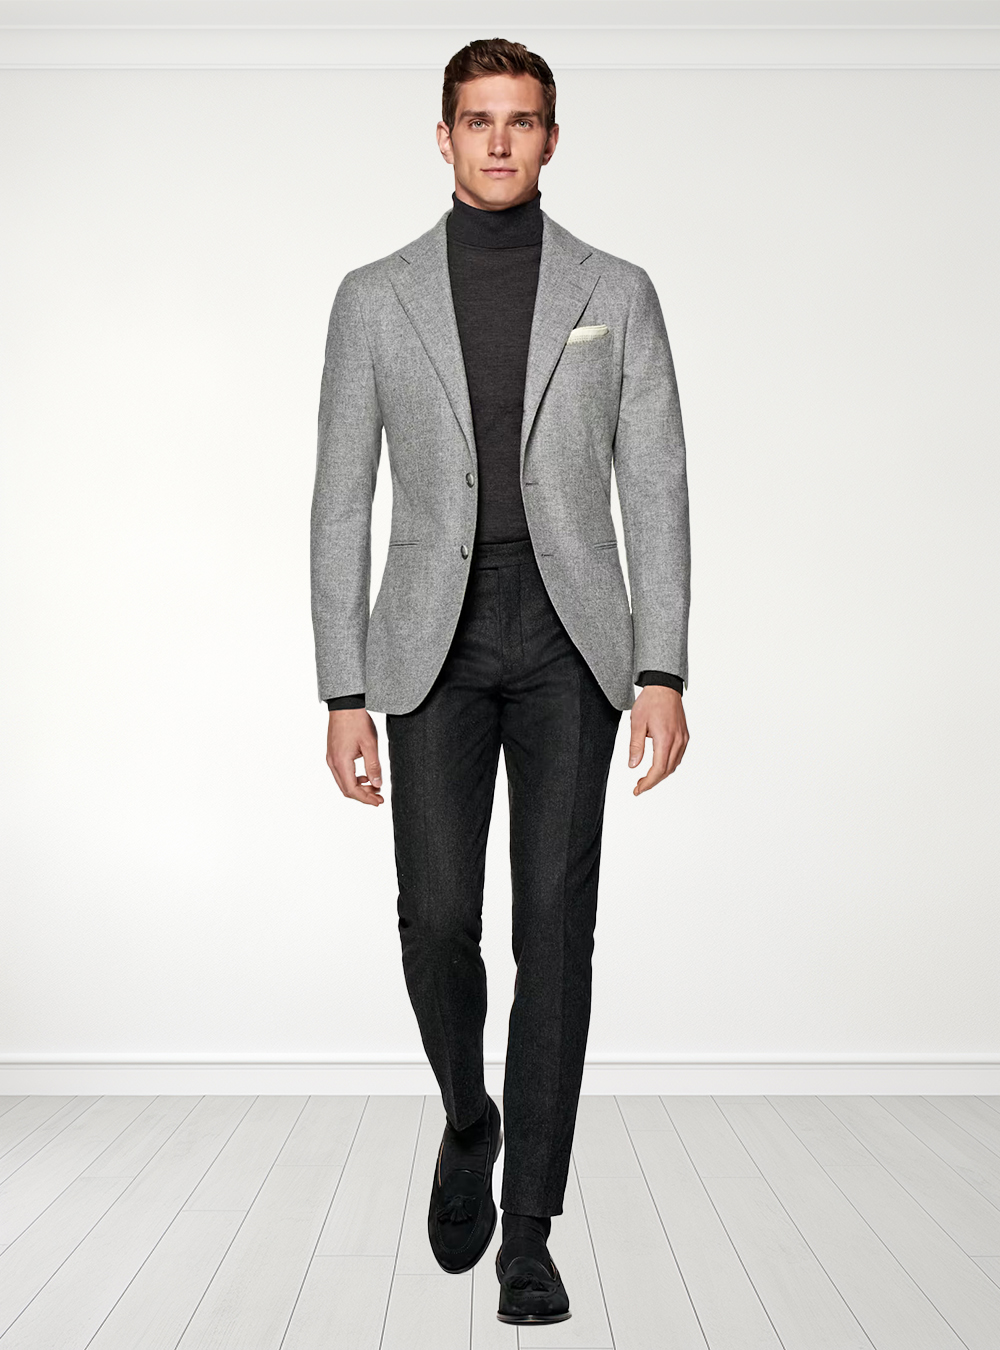 light grey blazer, charcoal turtleneck, and black pants